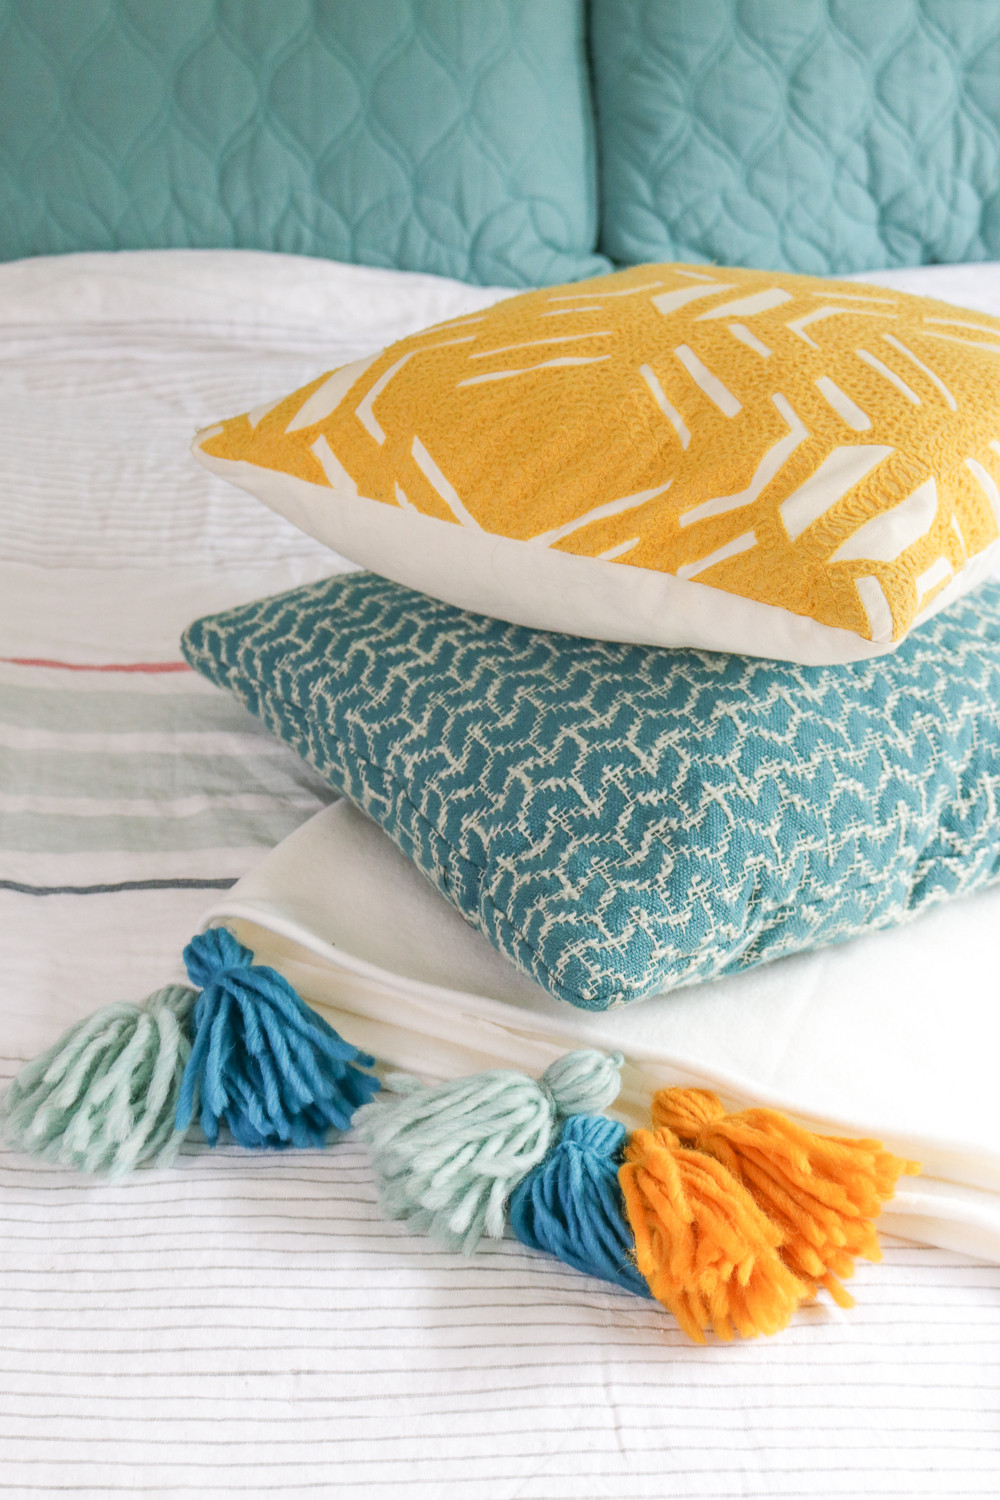 Best ideas about DIY Fleece Blanket
. Save or Pin DIY Fleece Tassel Blanket Now.